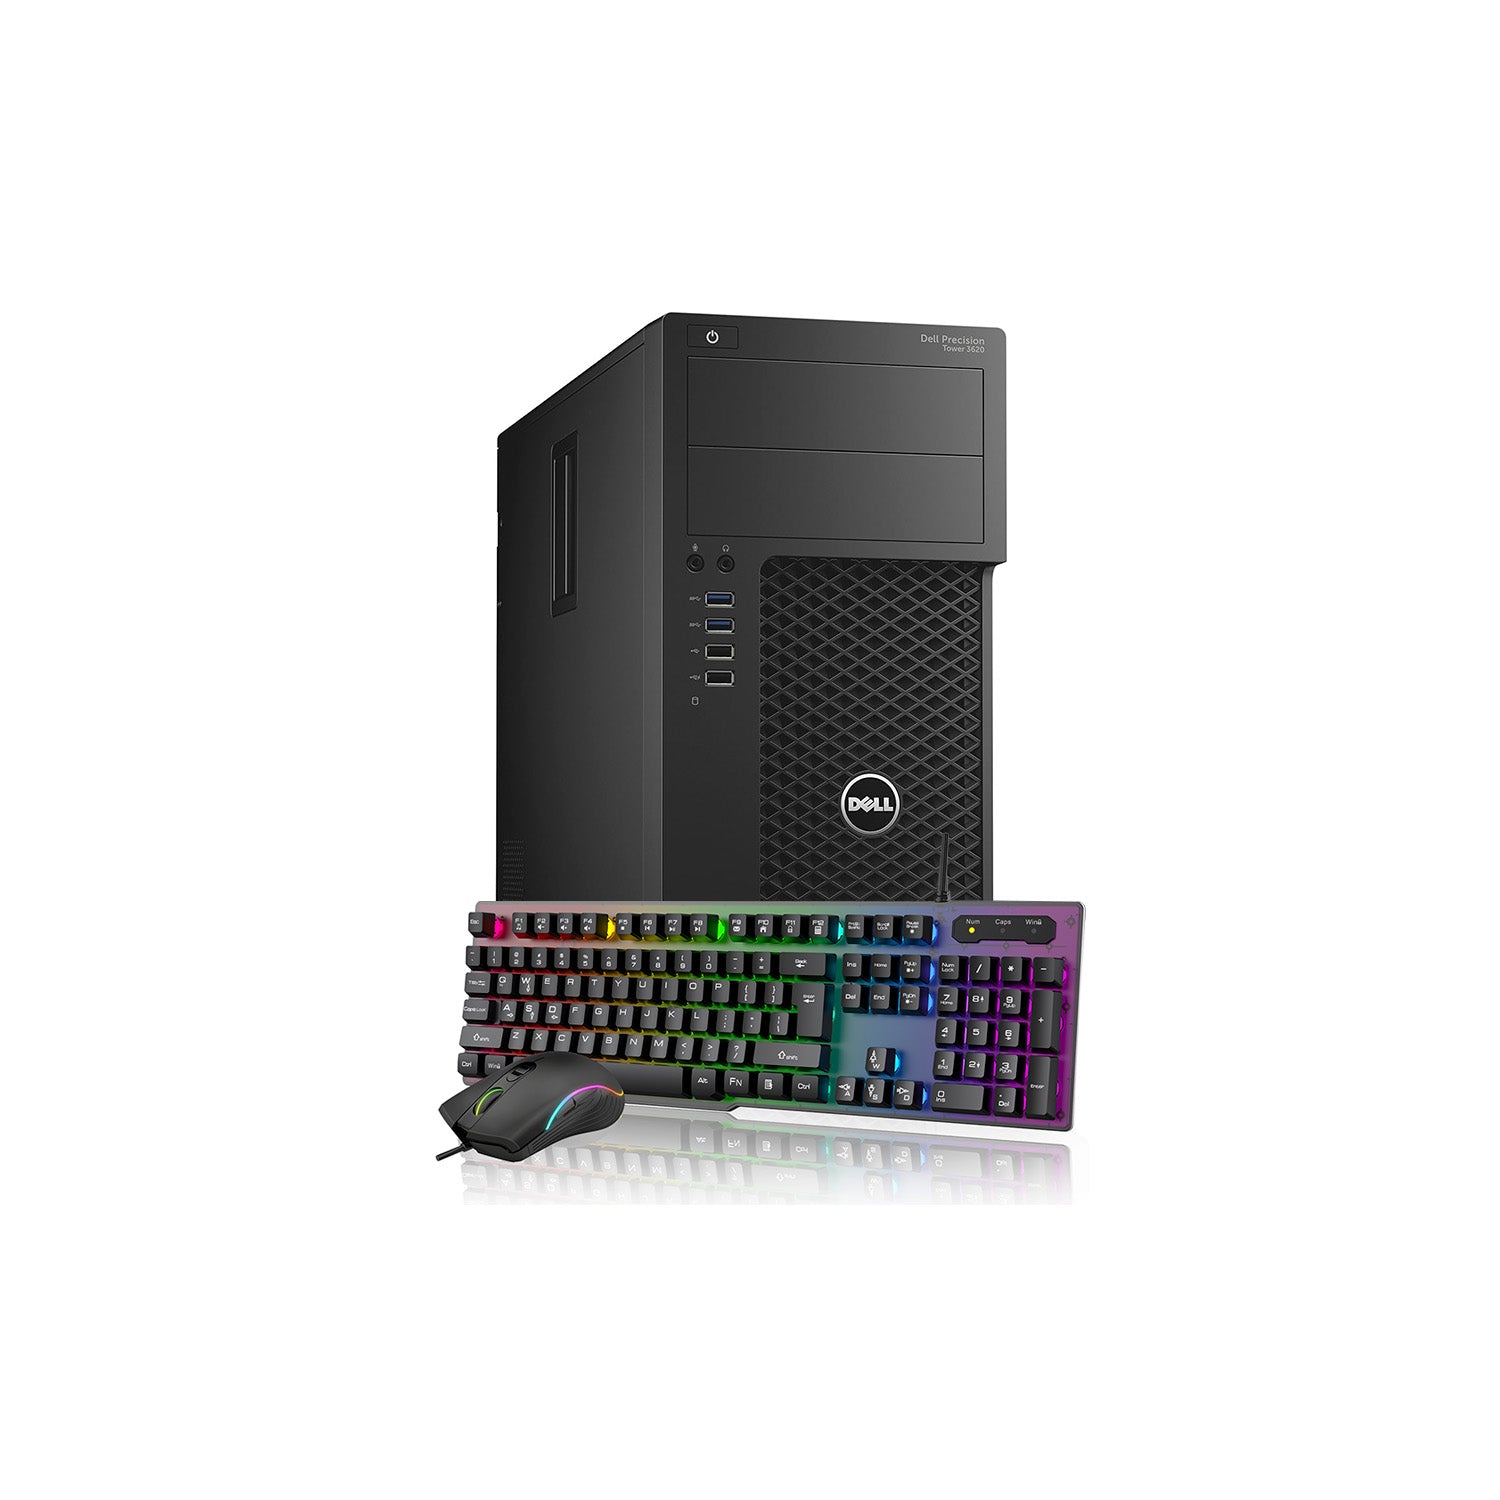 Dell Precision T3620 Tower Gaming Desktop Computer PC| Intel Core i7 - (6700) 6th Gen| 16GB - 32GB DDR4 RAM| 512GB -2TB SSD| Windows 10 Pro| RX550, GT1030, GTX 1630, 1050Ti, 1650 - Refurbished